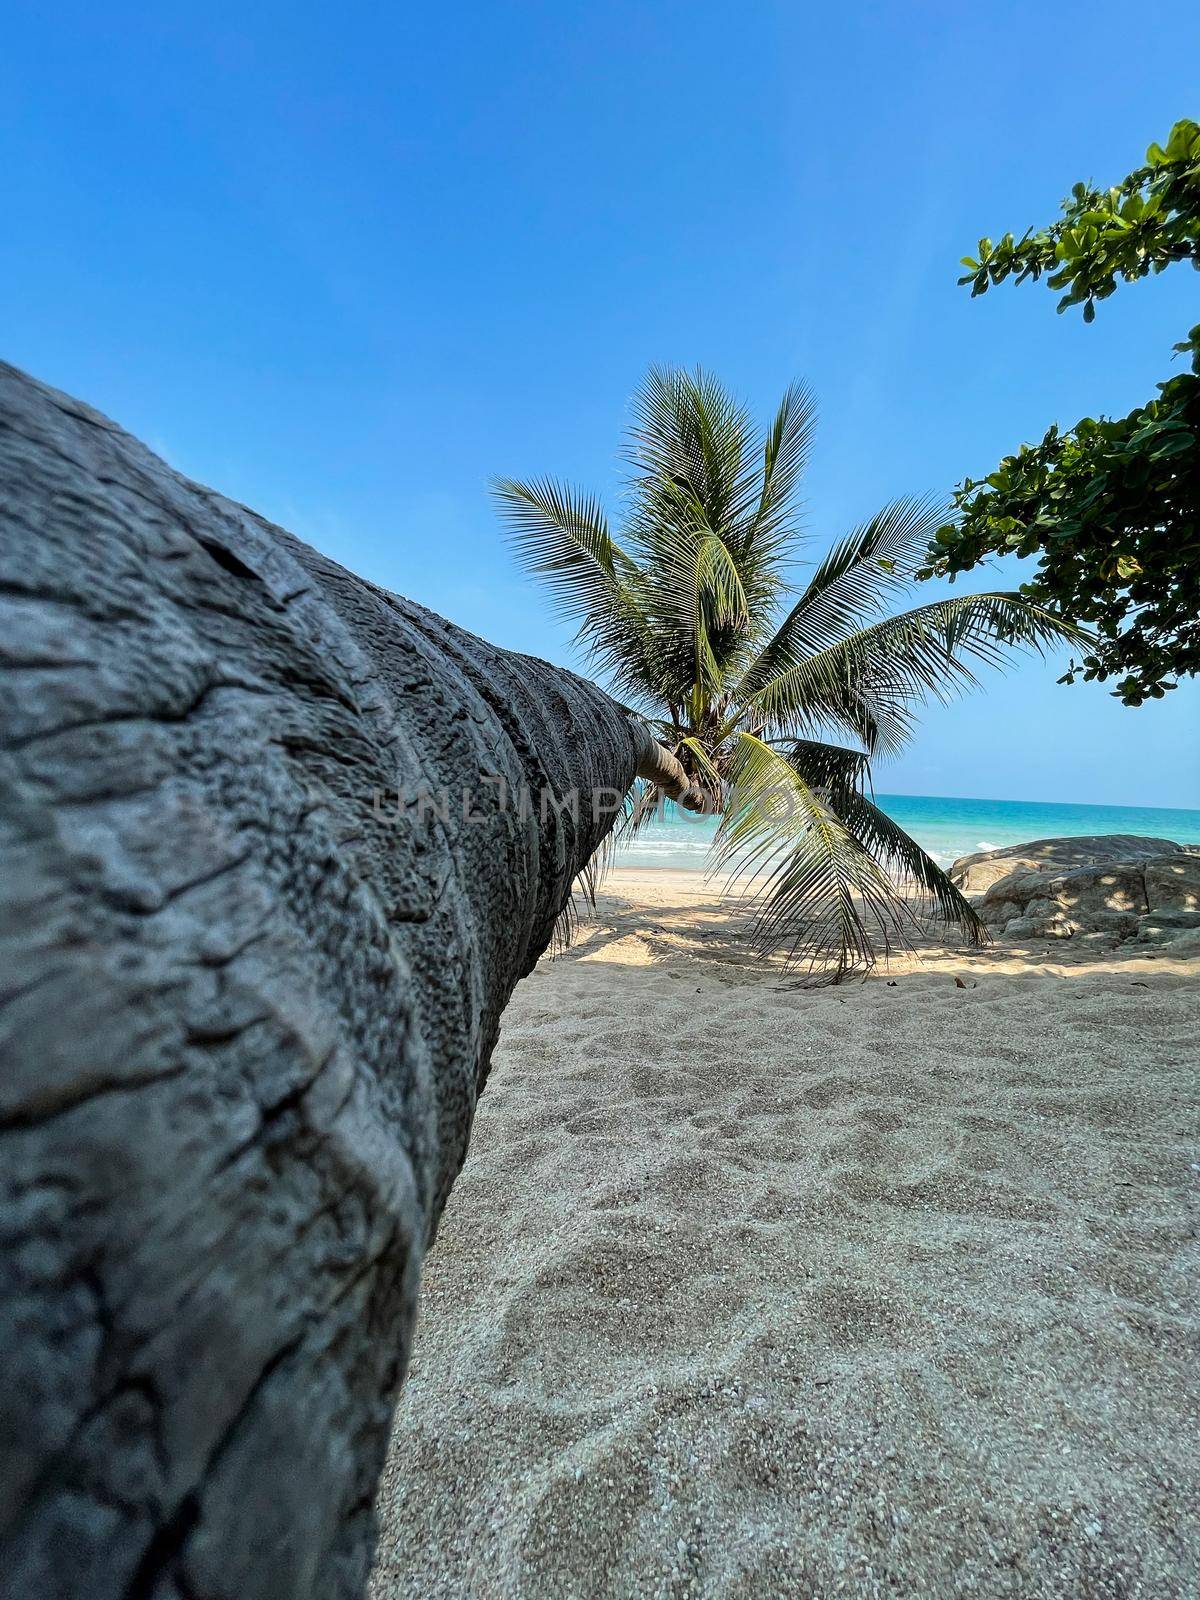 Slant coconut palm tree with blue sky on tropical beach. by sirawit99